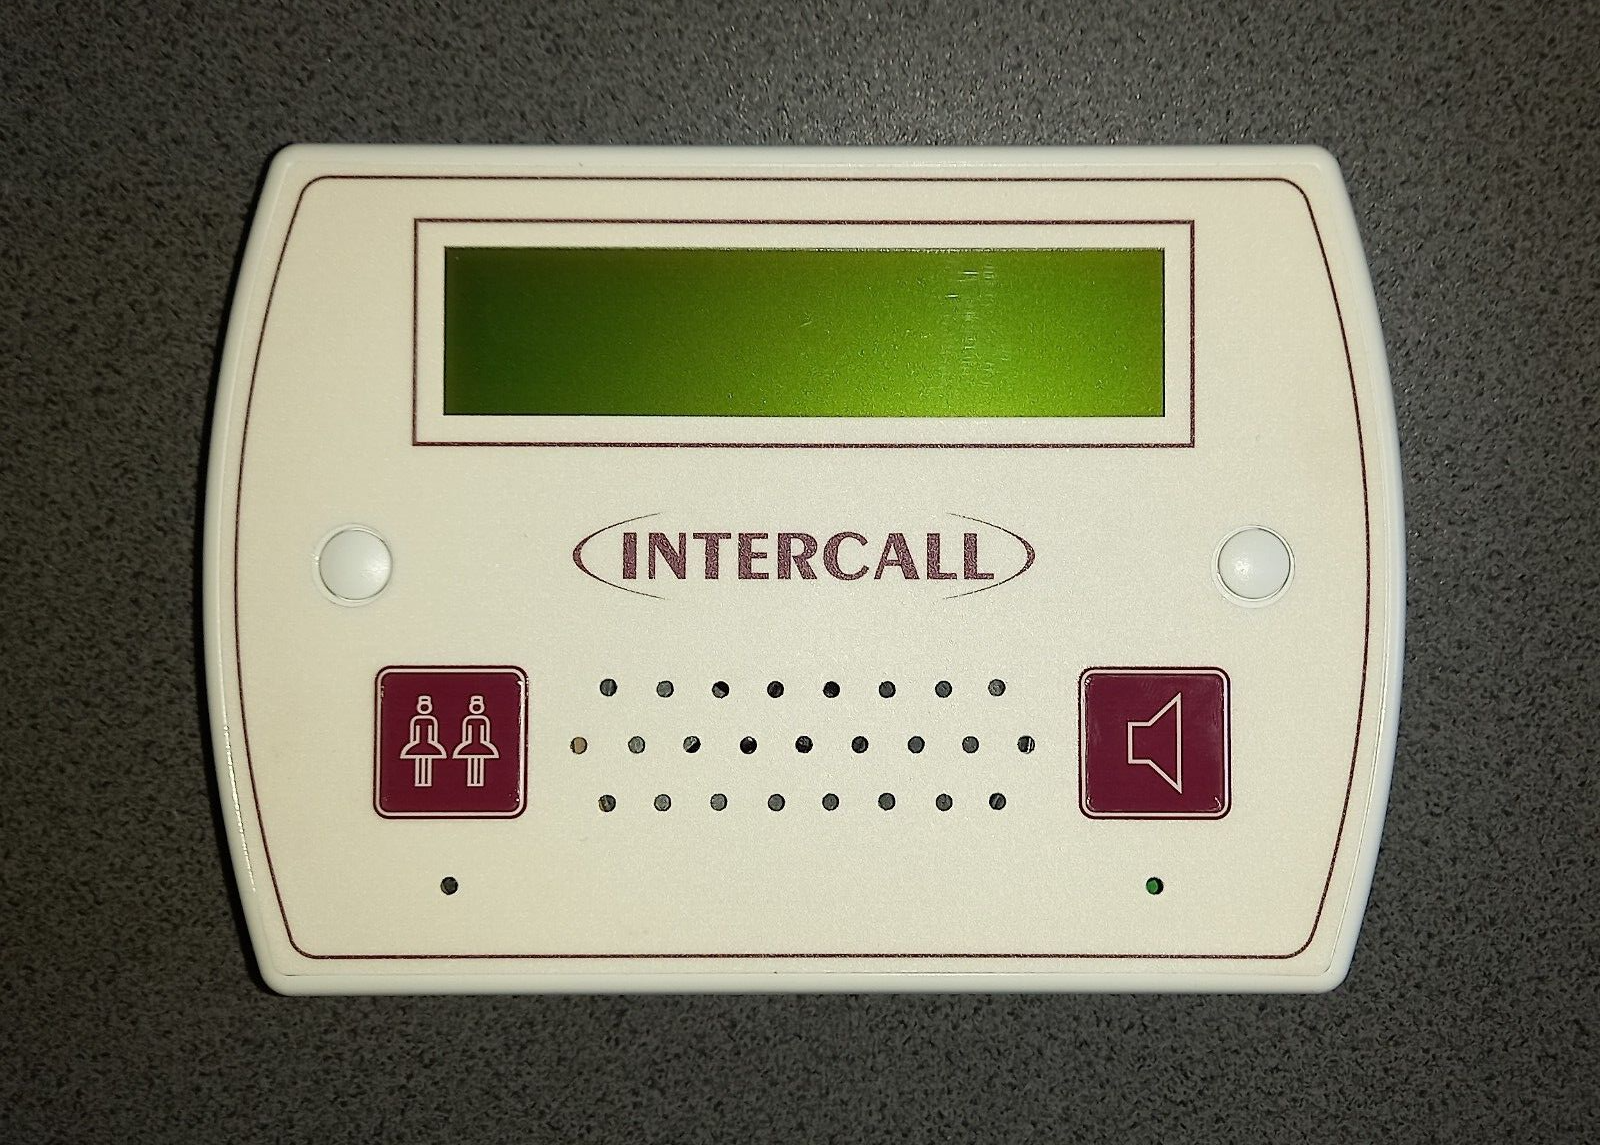 L758 Audio Display Unit Intercall Nurse call intercom facility the alarm 